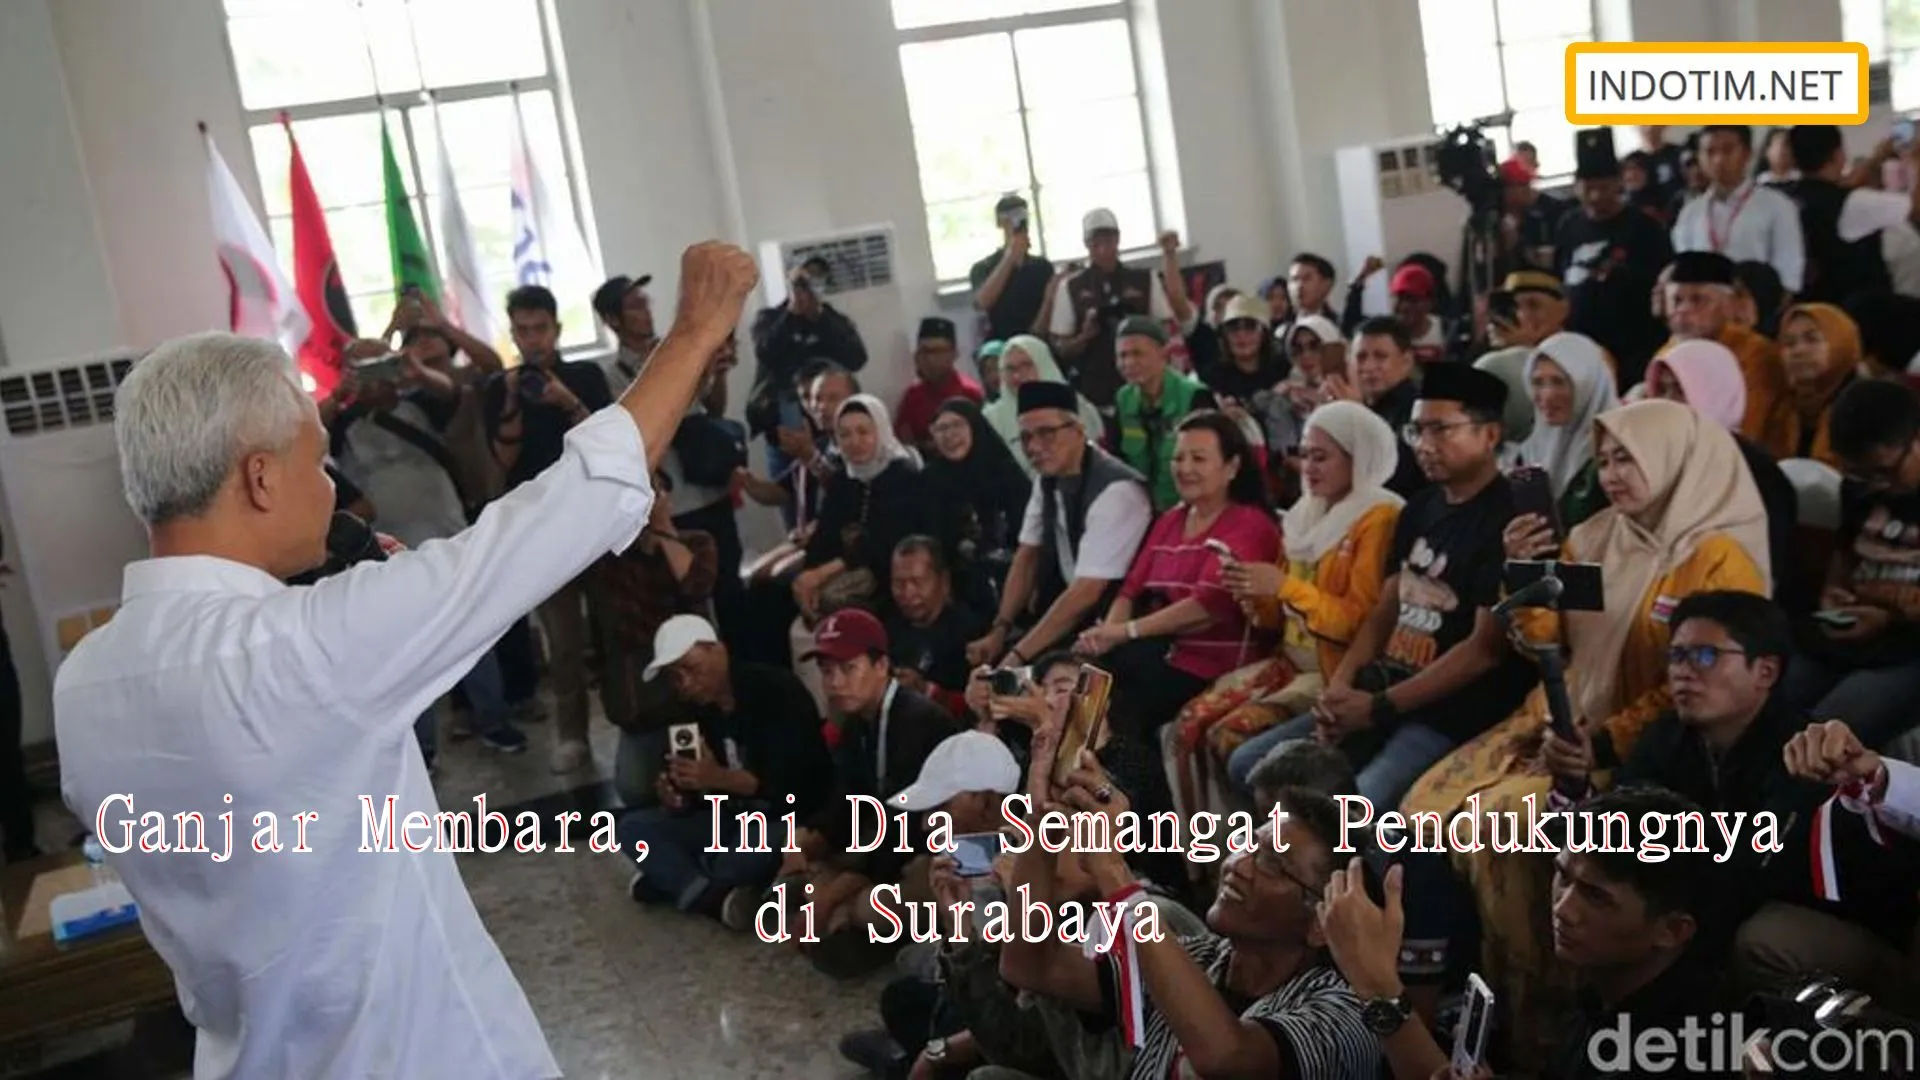 Ganjar Membara, Ini Dia Semangat Pendukungnya di Surabaya